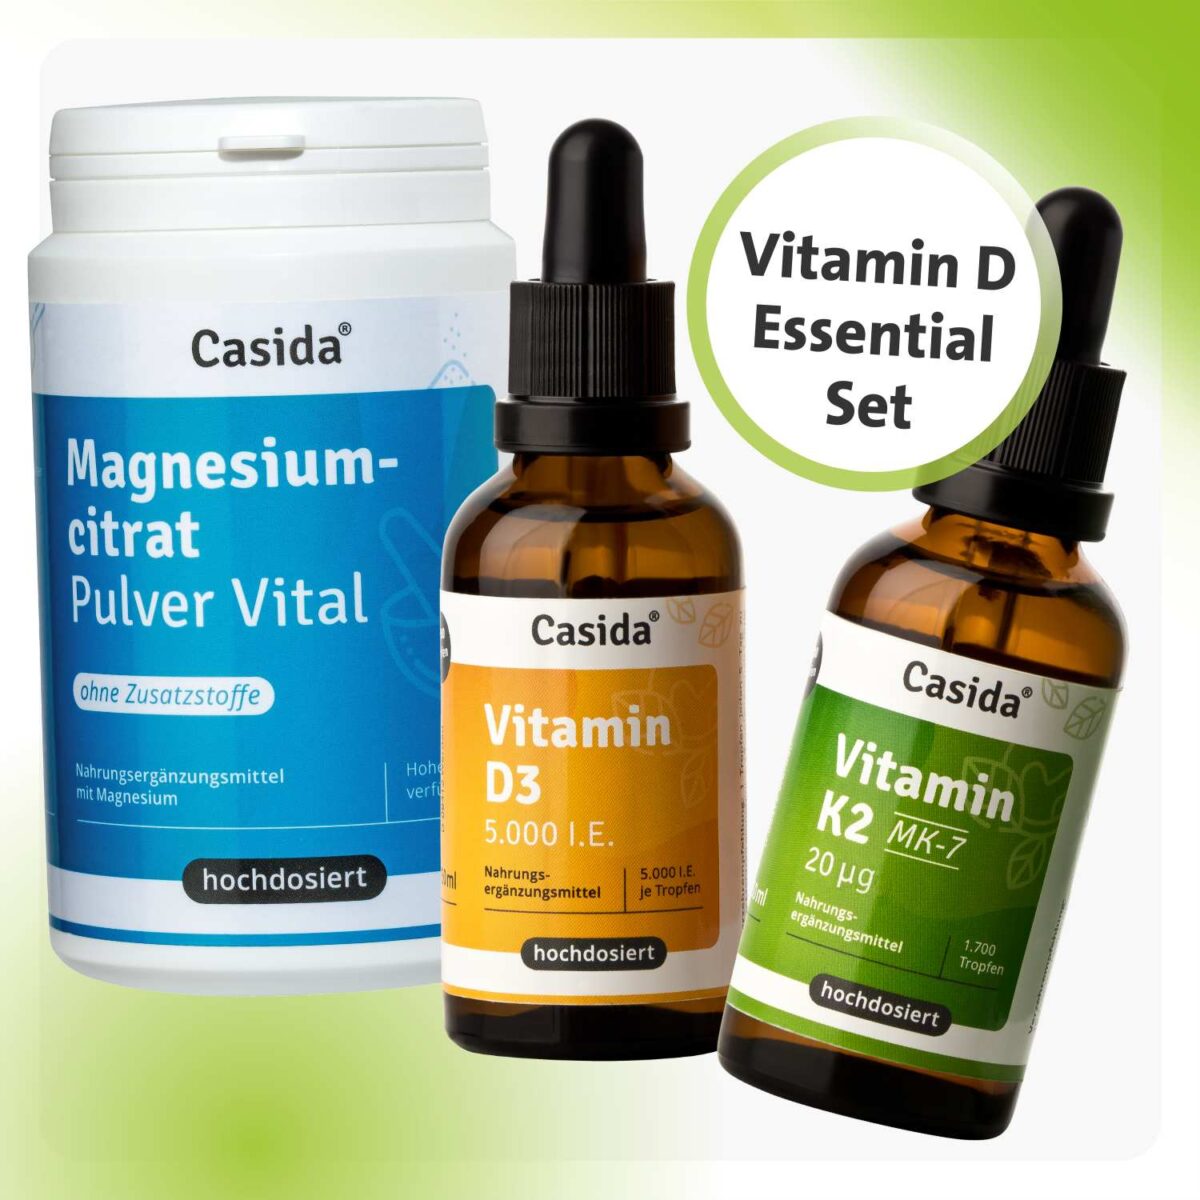 Vitamin D Essential Set